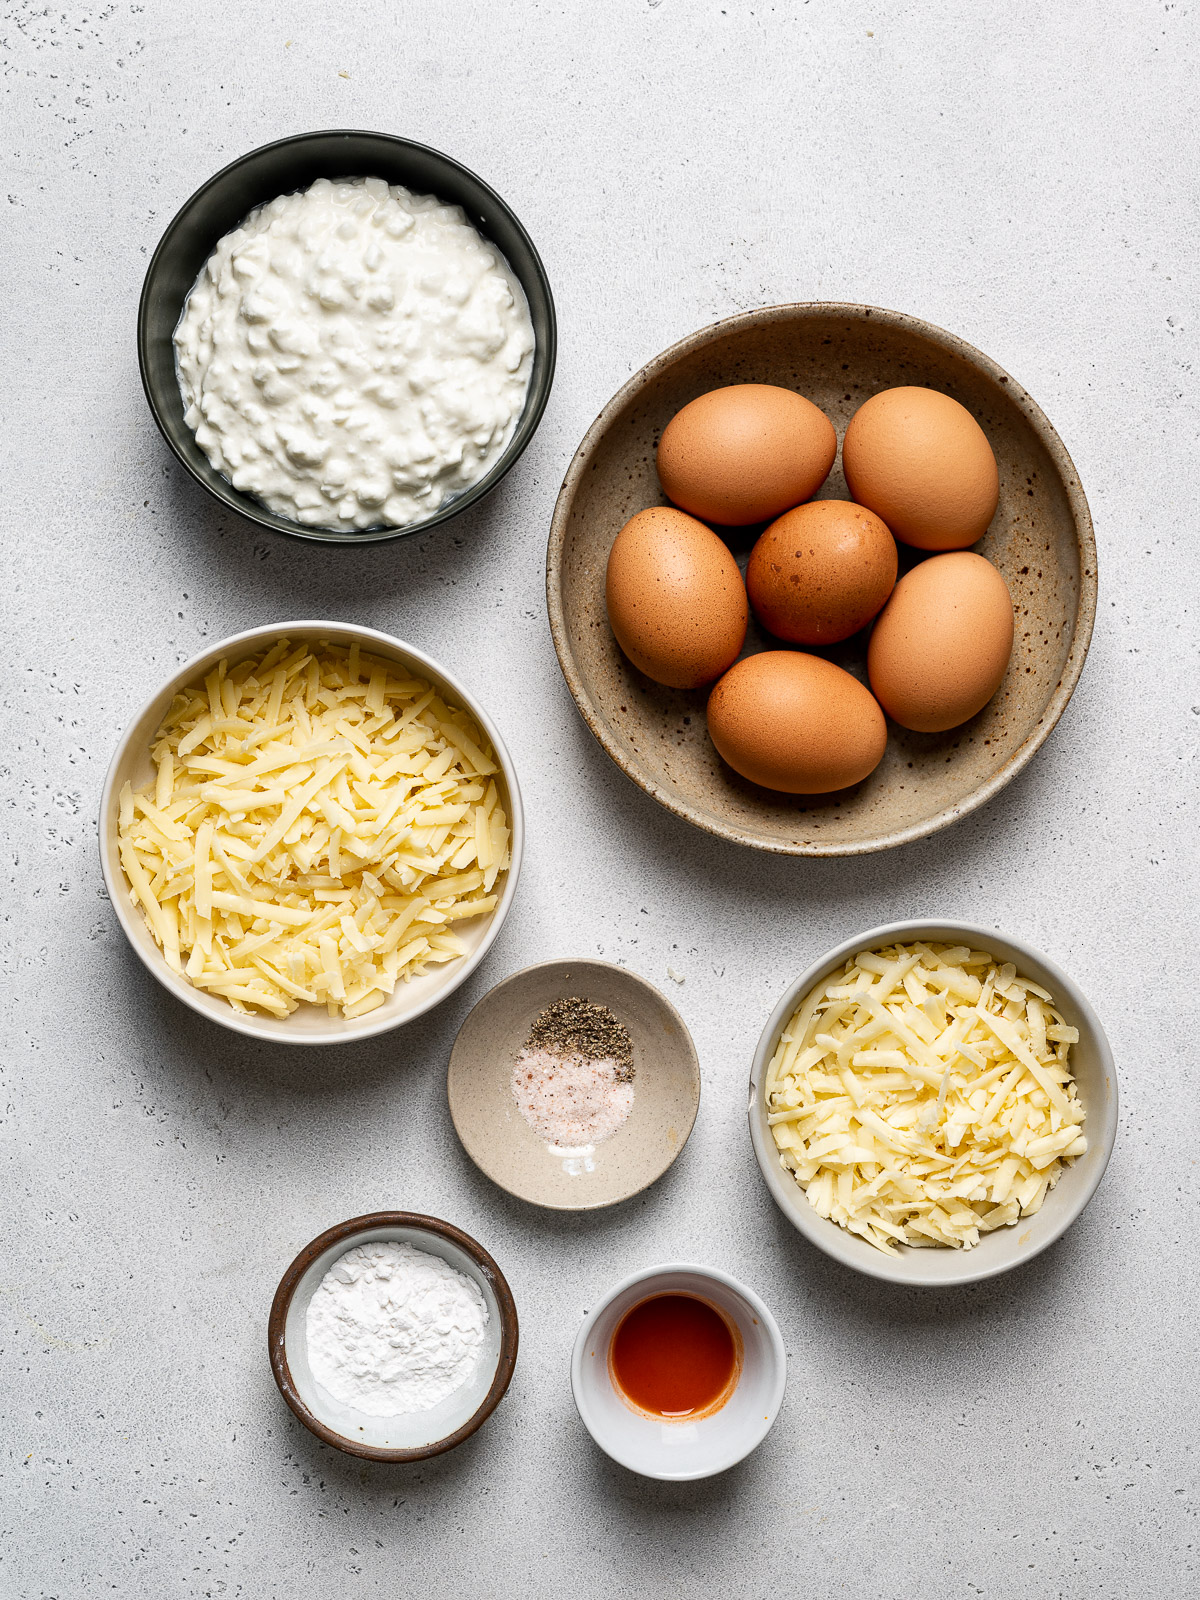 ingredients needed to make egg bites